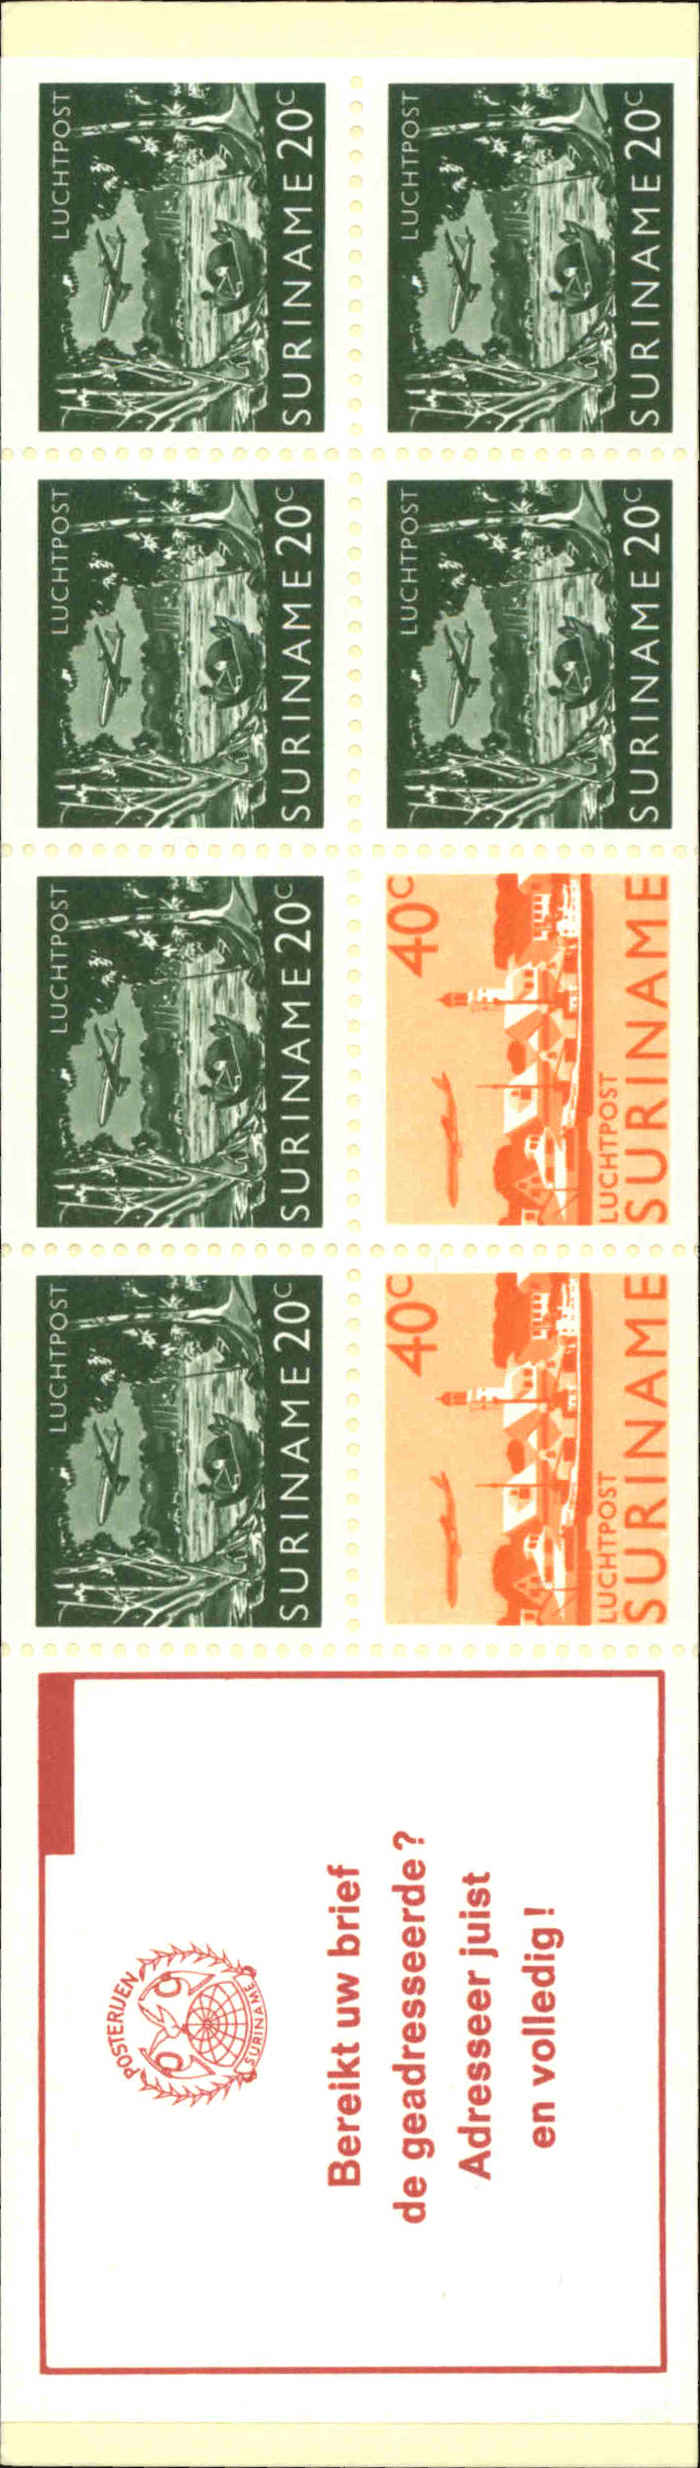 Front view of Surinam C77b collectors stamp